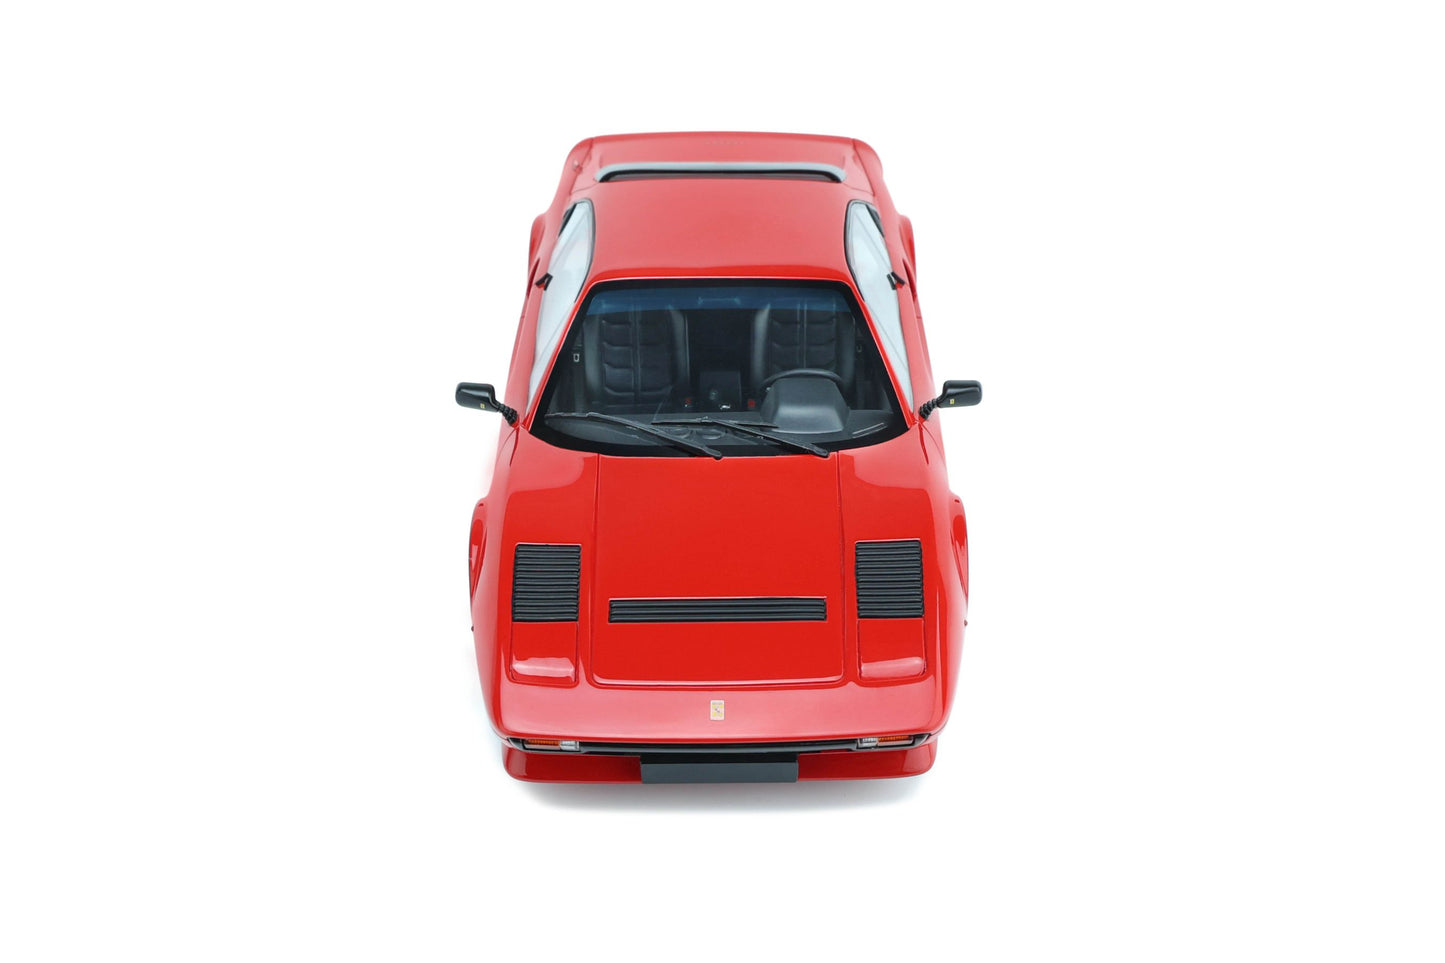 GT Spirit - Ferrari 208 GTB Turbo (Rosso Corsa Red) 1:18 Scale Model Car